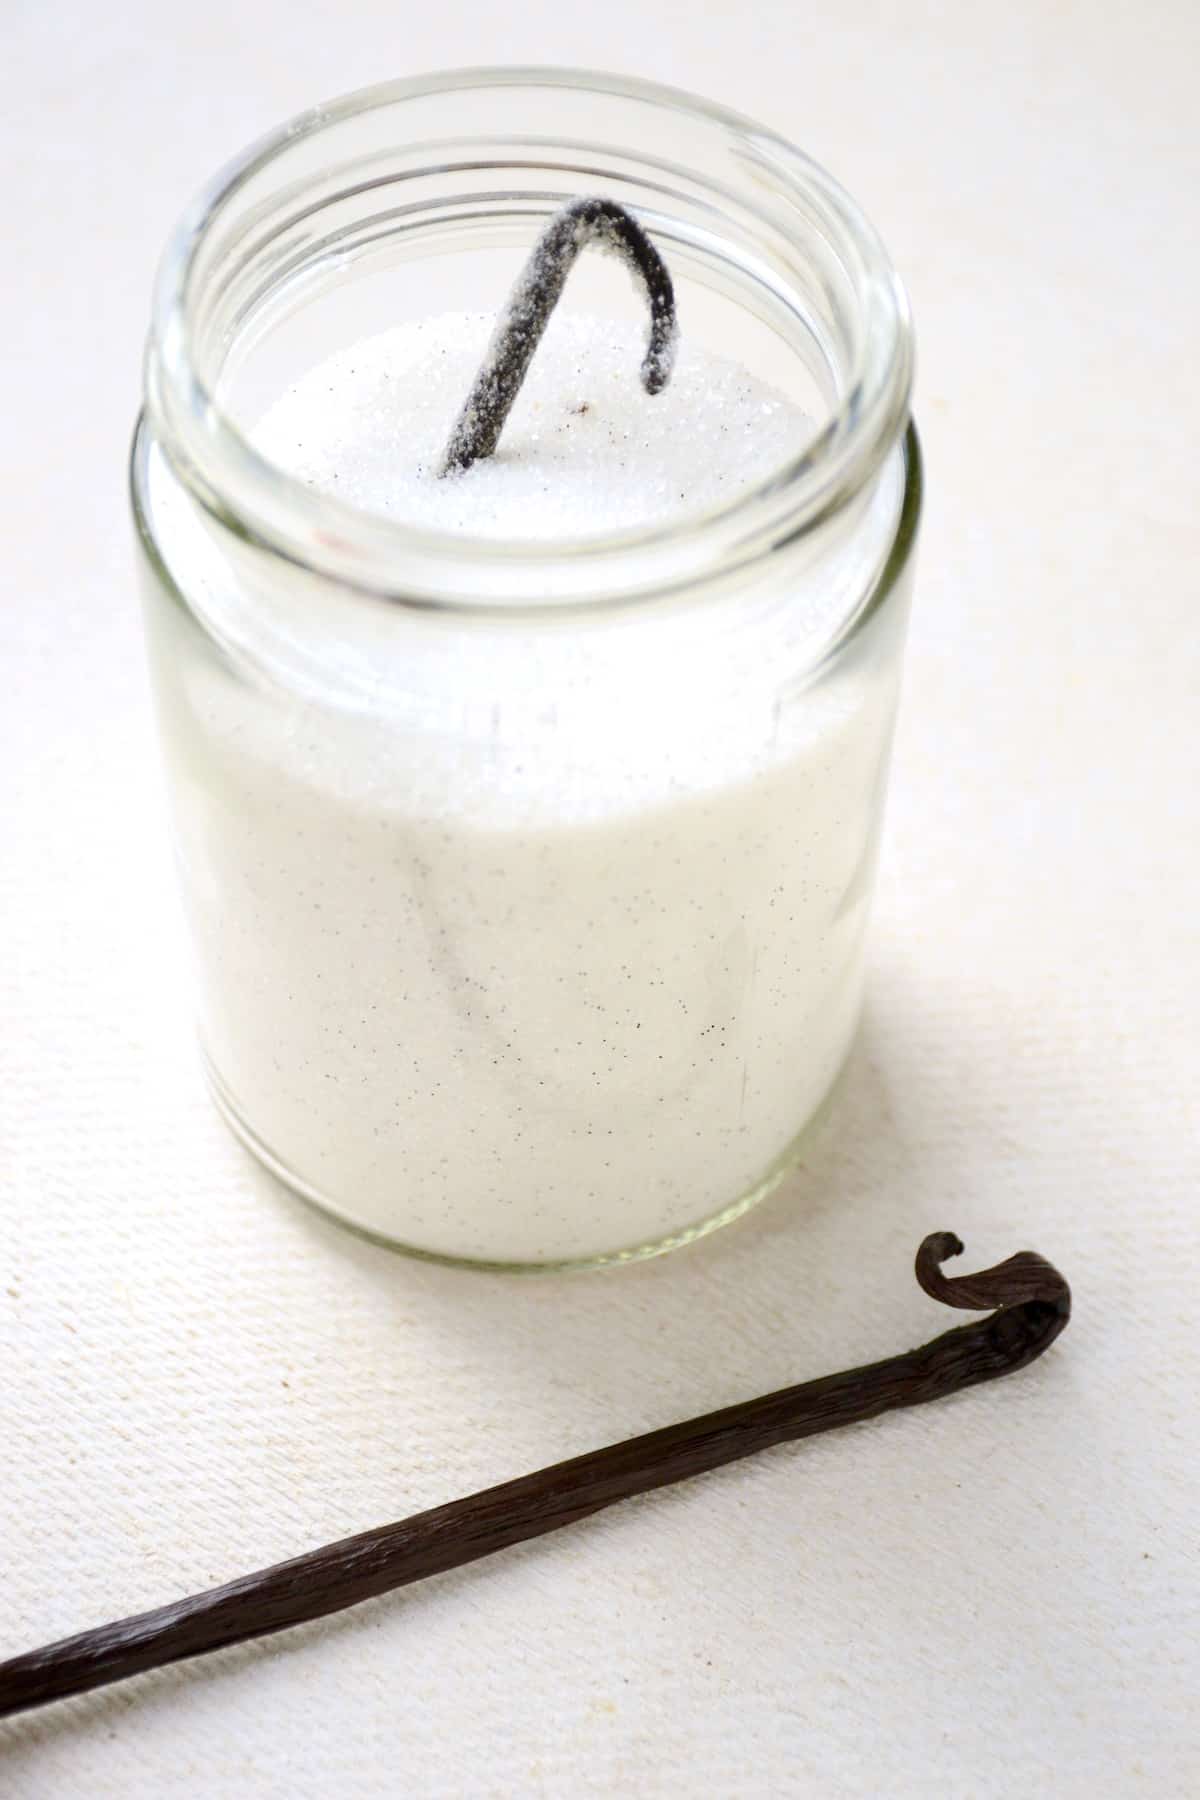 A jar of homemade vanilla sugar. A whole dark brown vanilla pod is sticking out of the granulated sugar.